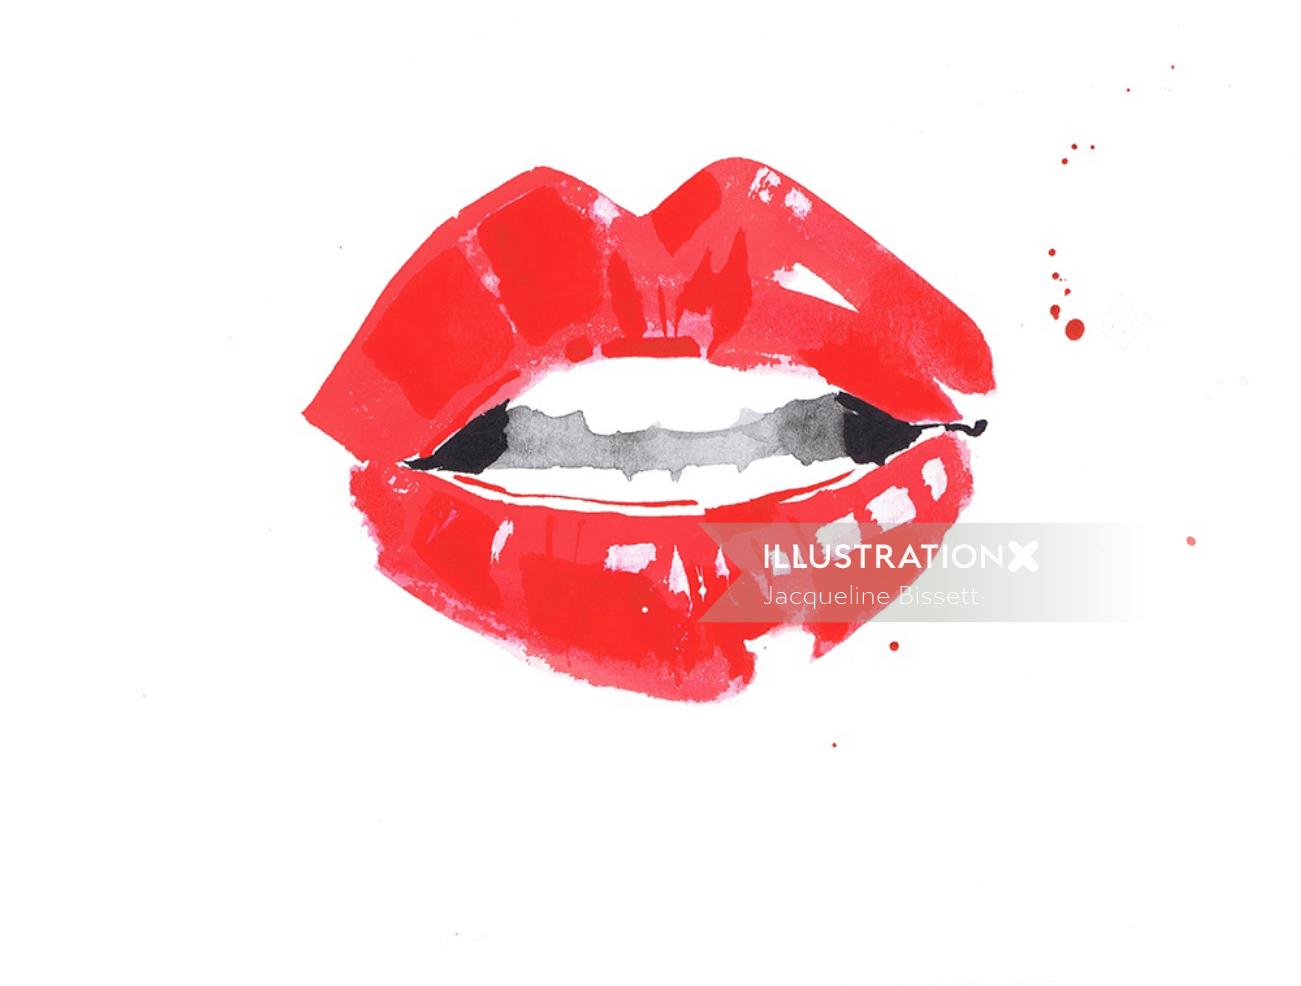 Illustration of red lips